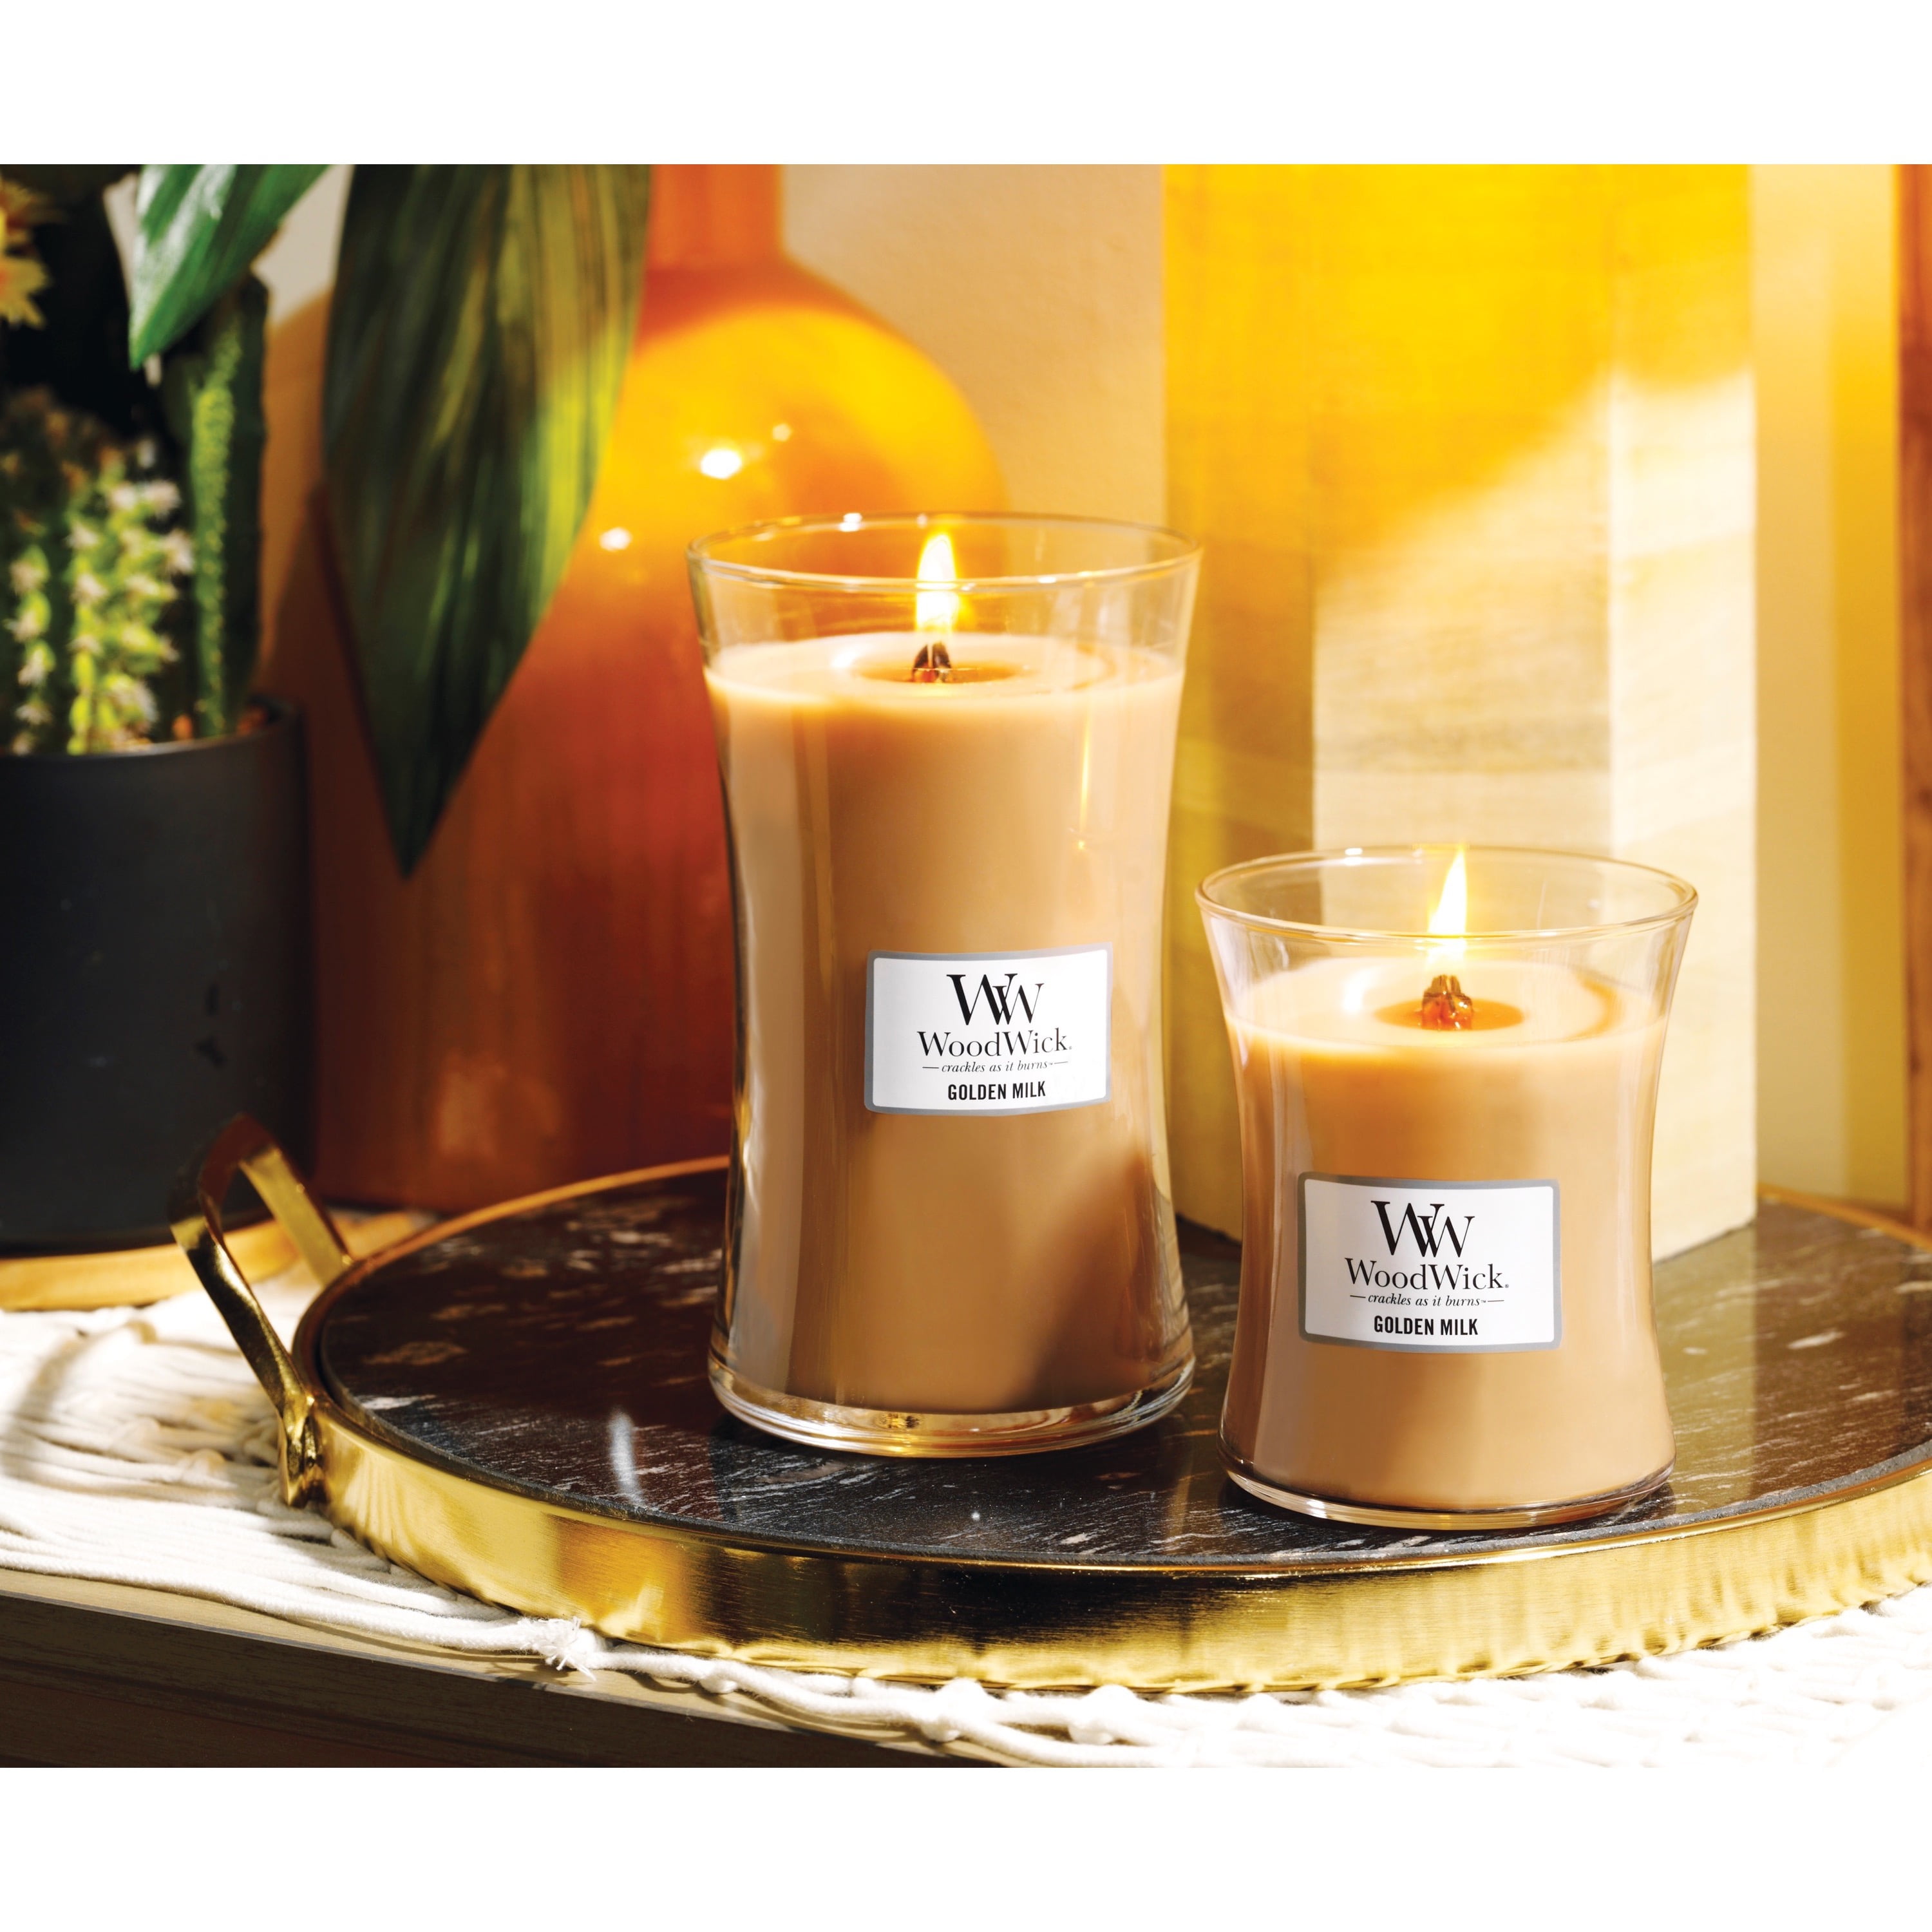 Hemp & Ivy WoodWick® Medium Hourglass Candle - Medium Hourglass Candles